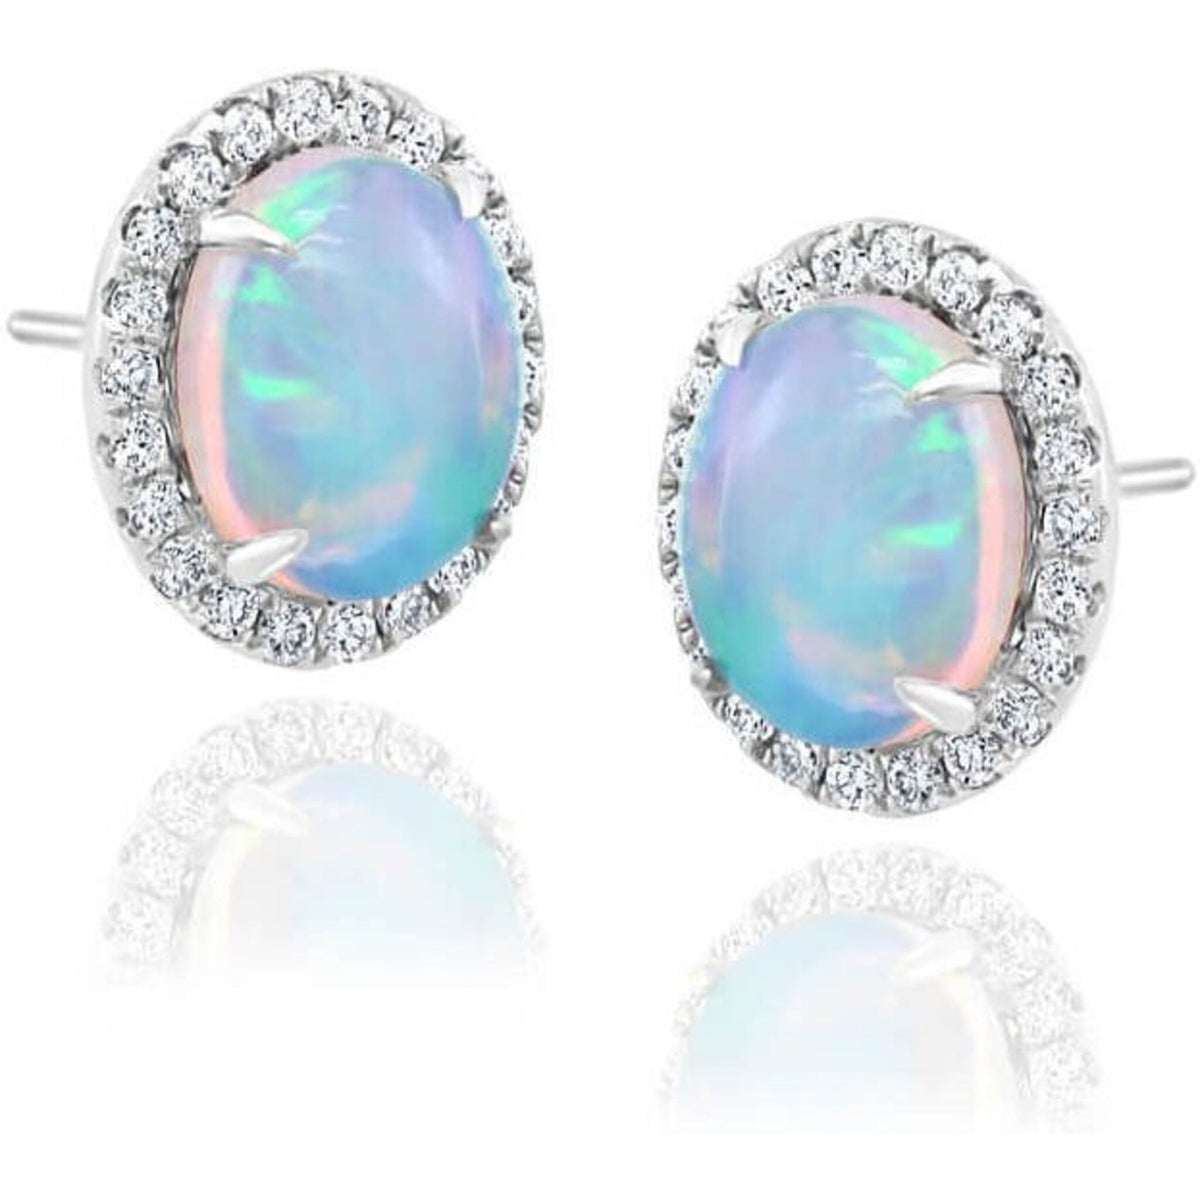 Elegant 14k opal and diamond earrings